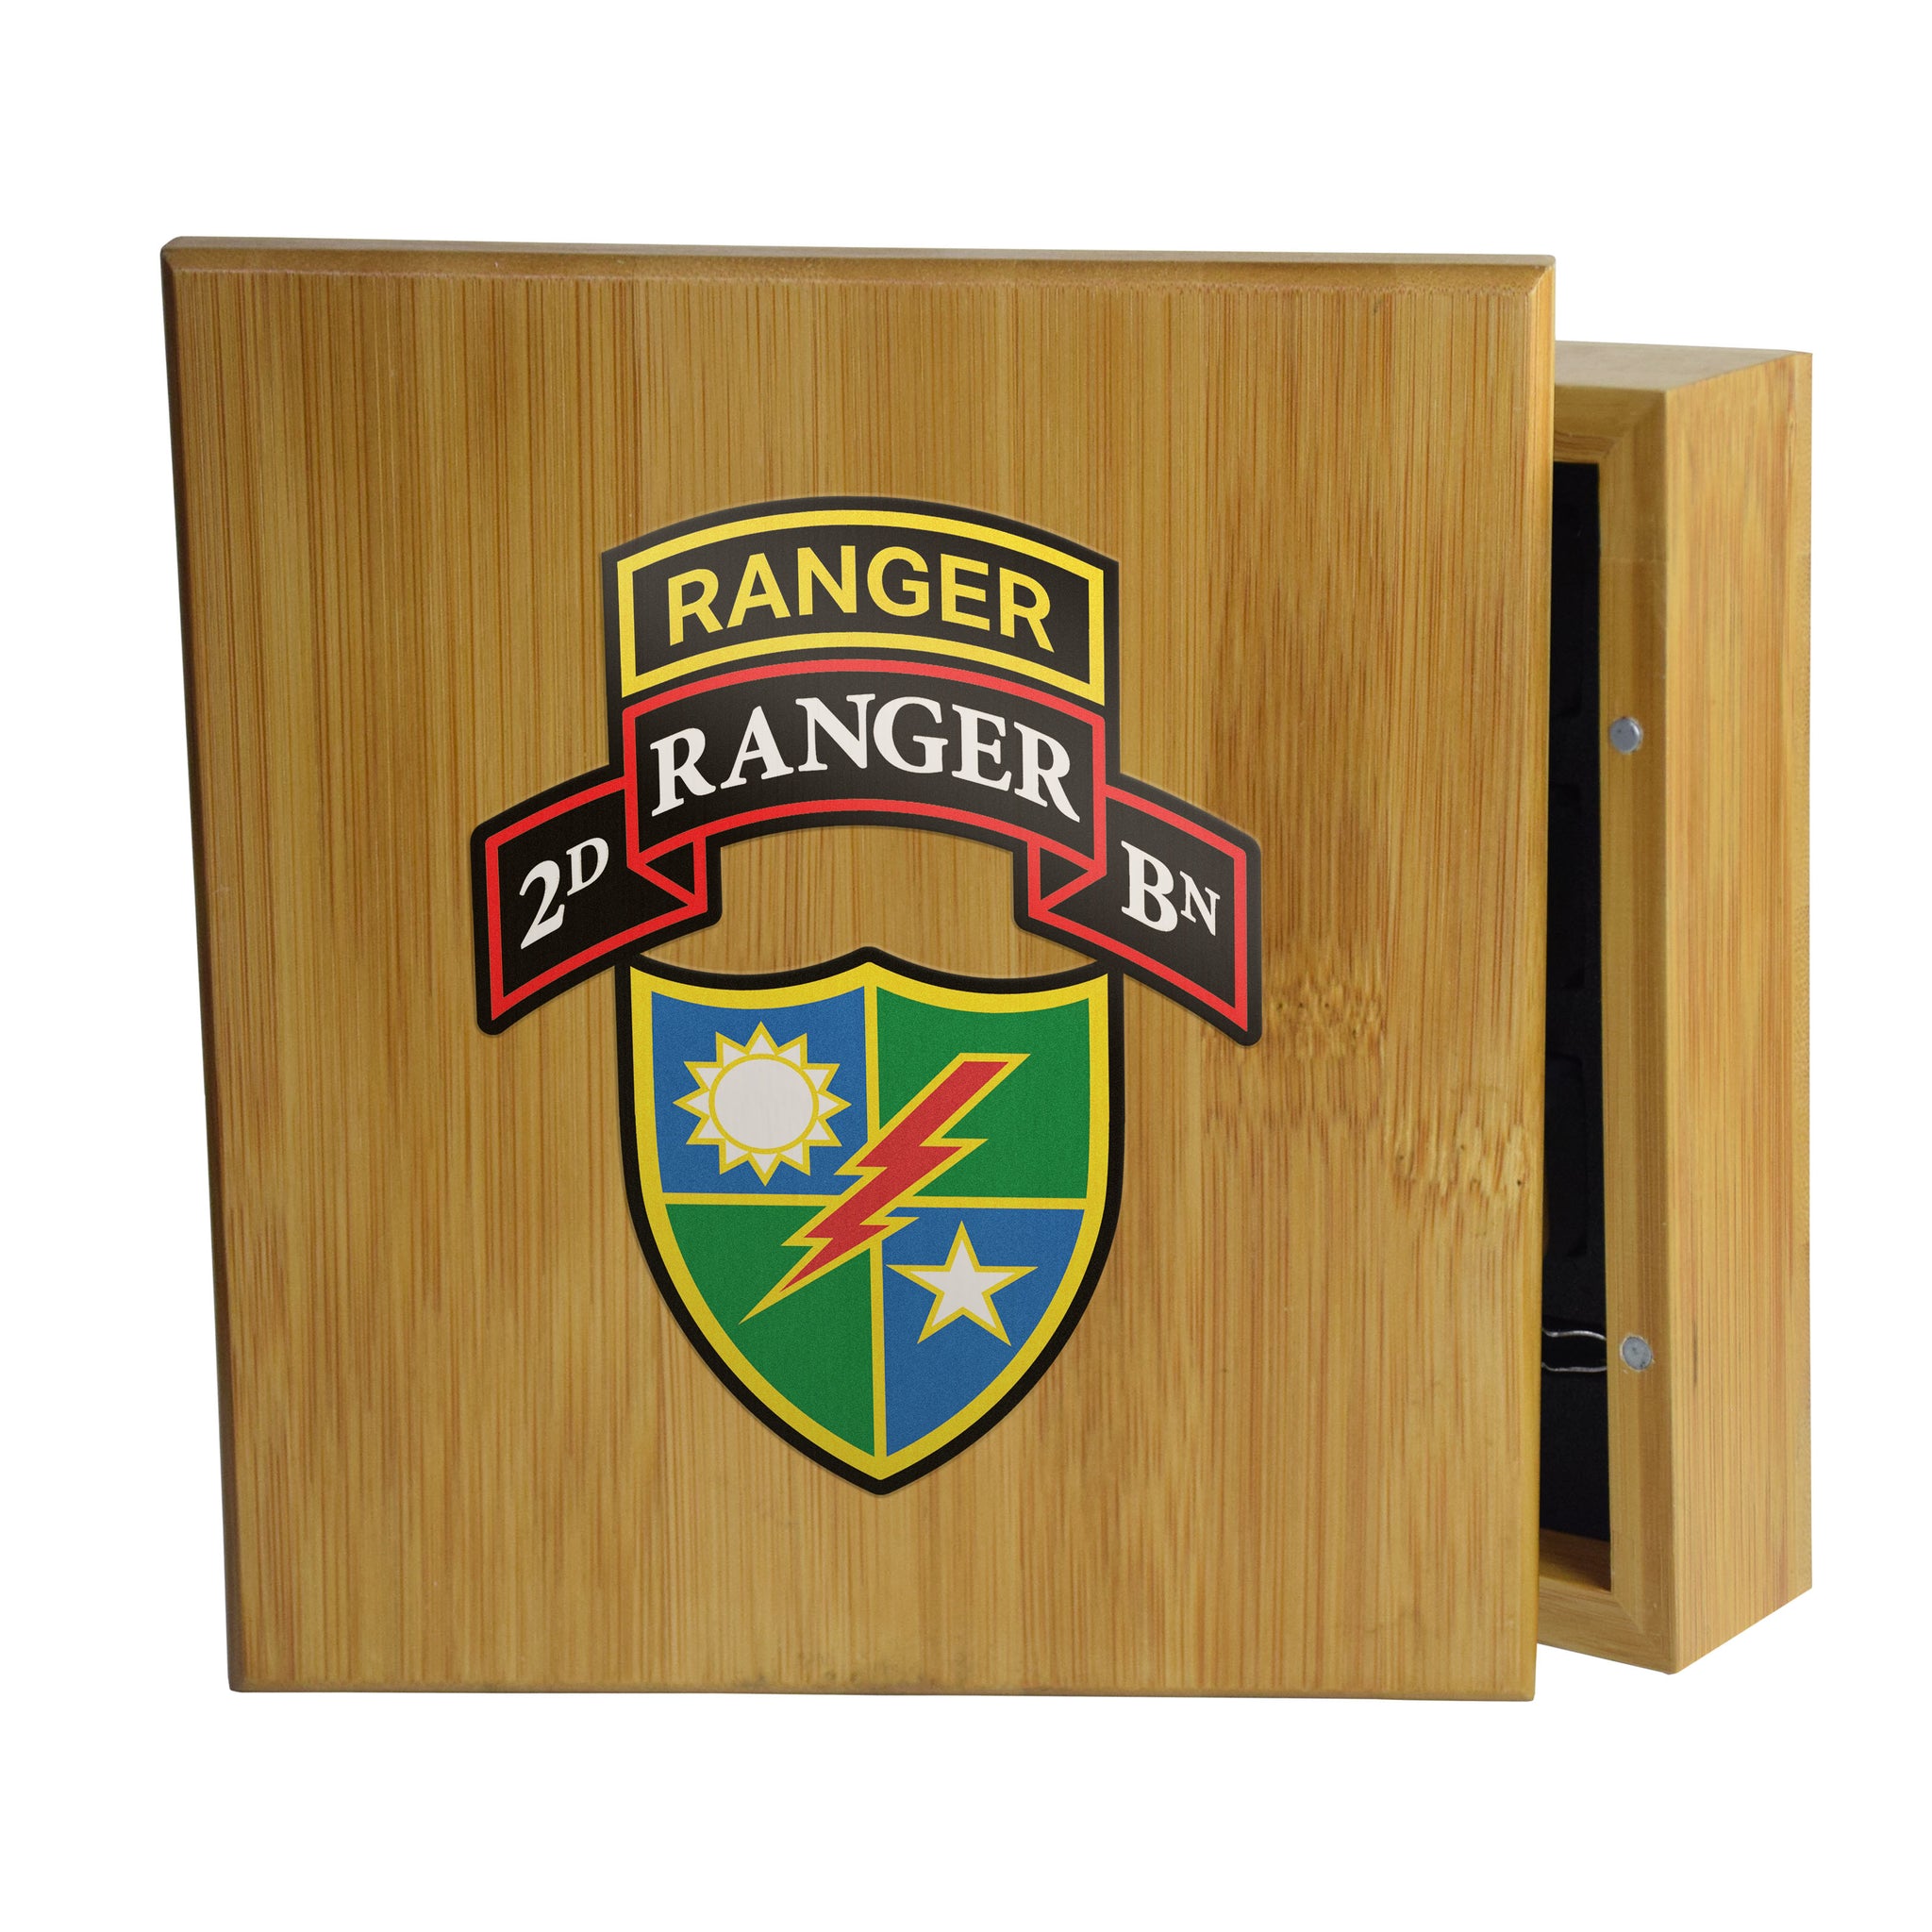 Ranger Batt UV Printed Whiskey Stone Set